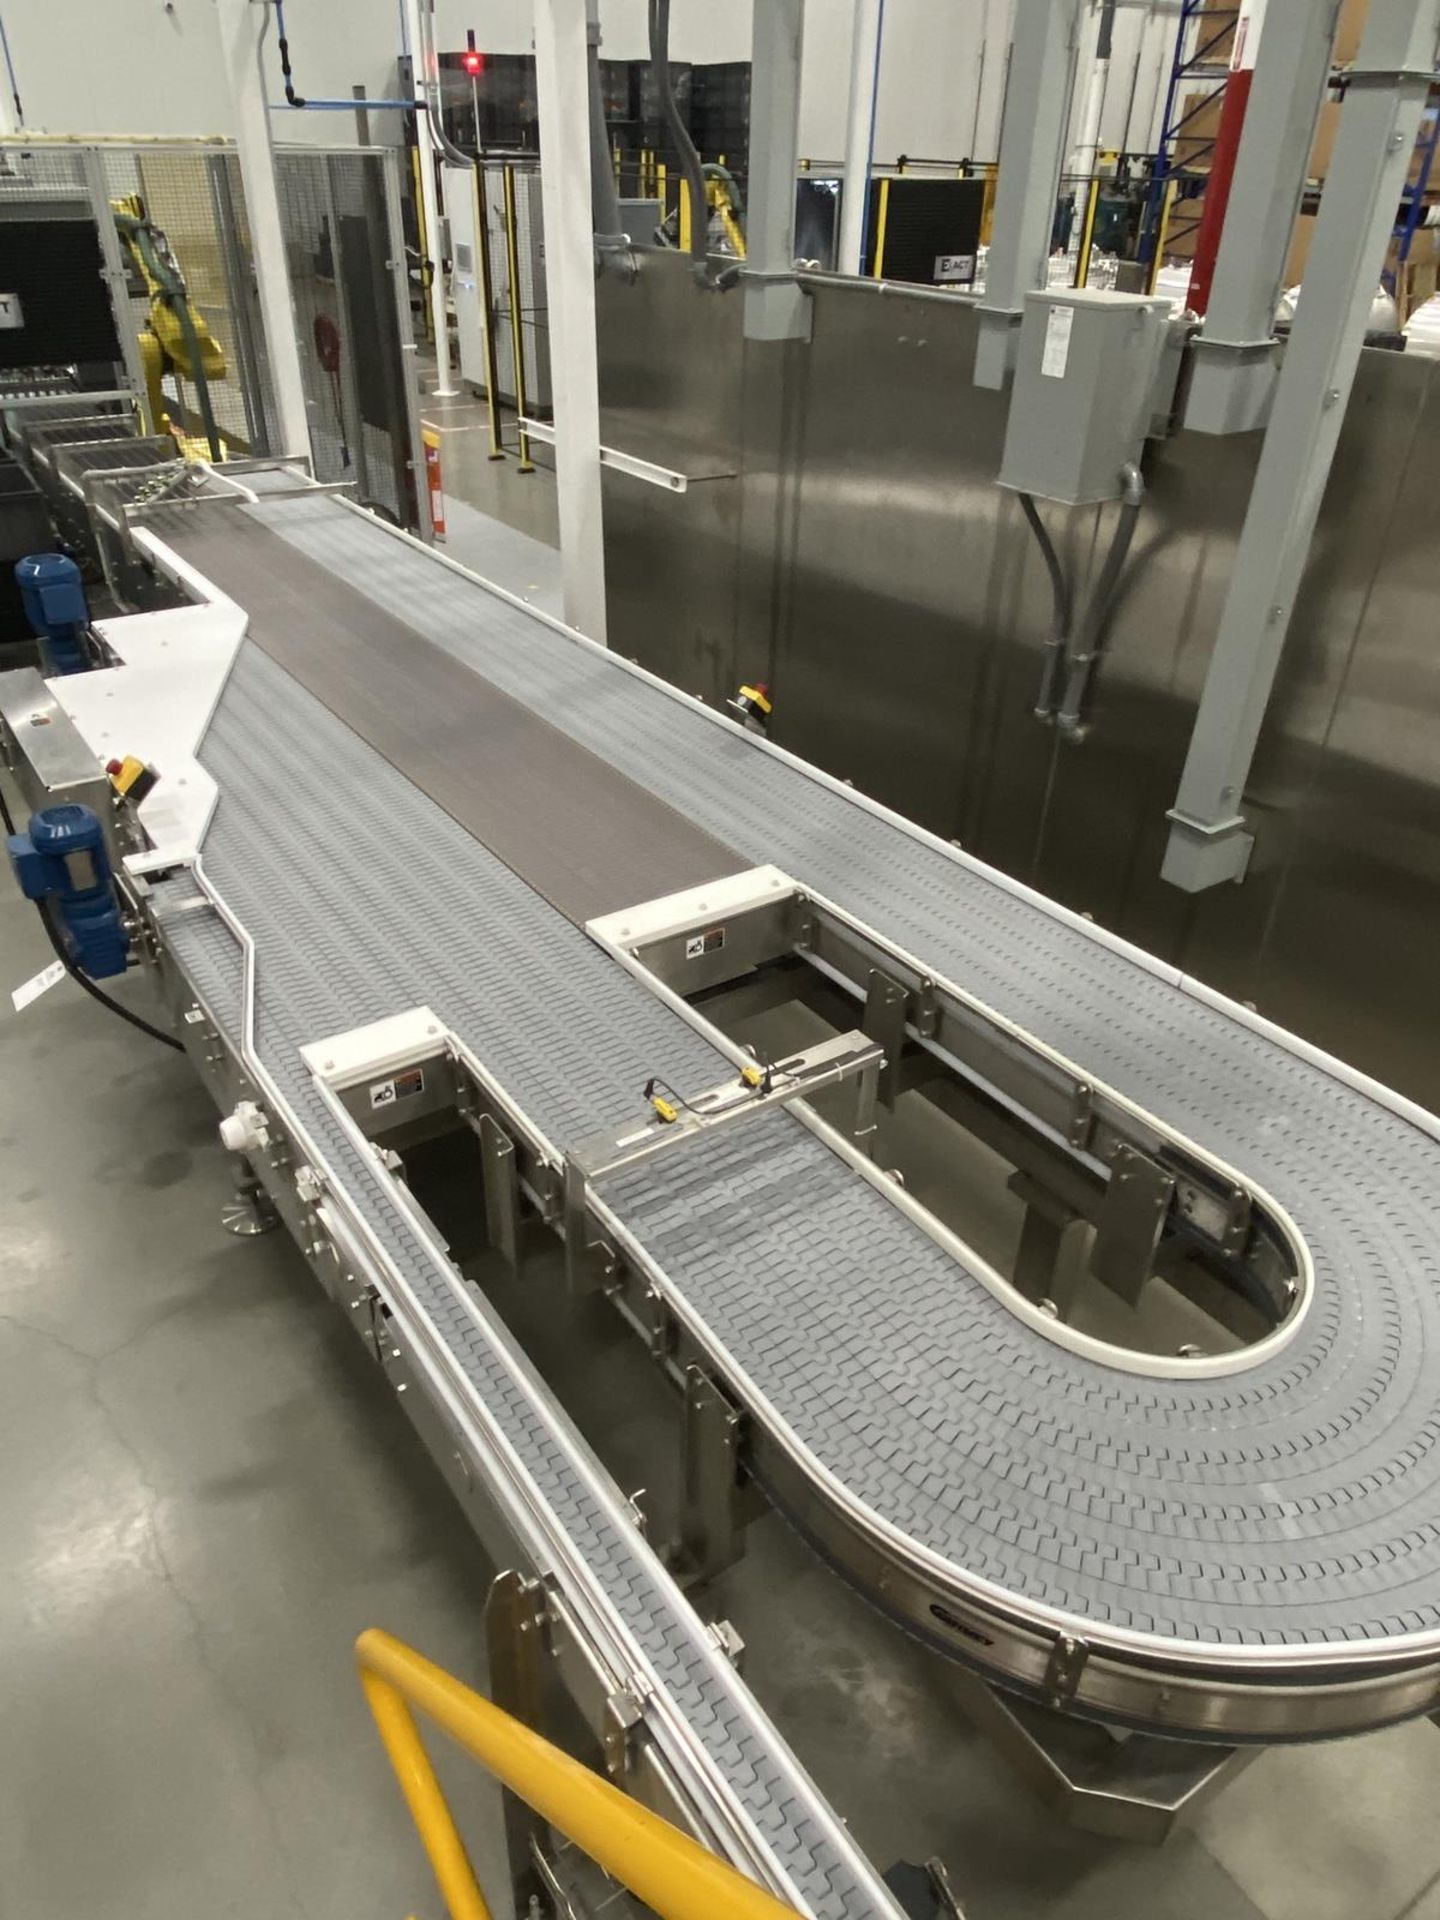 Conveyor System 3.5" & 16" Belting - Subj to Bulk | Rig Fee: $300 - Image 4 of 4